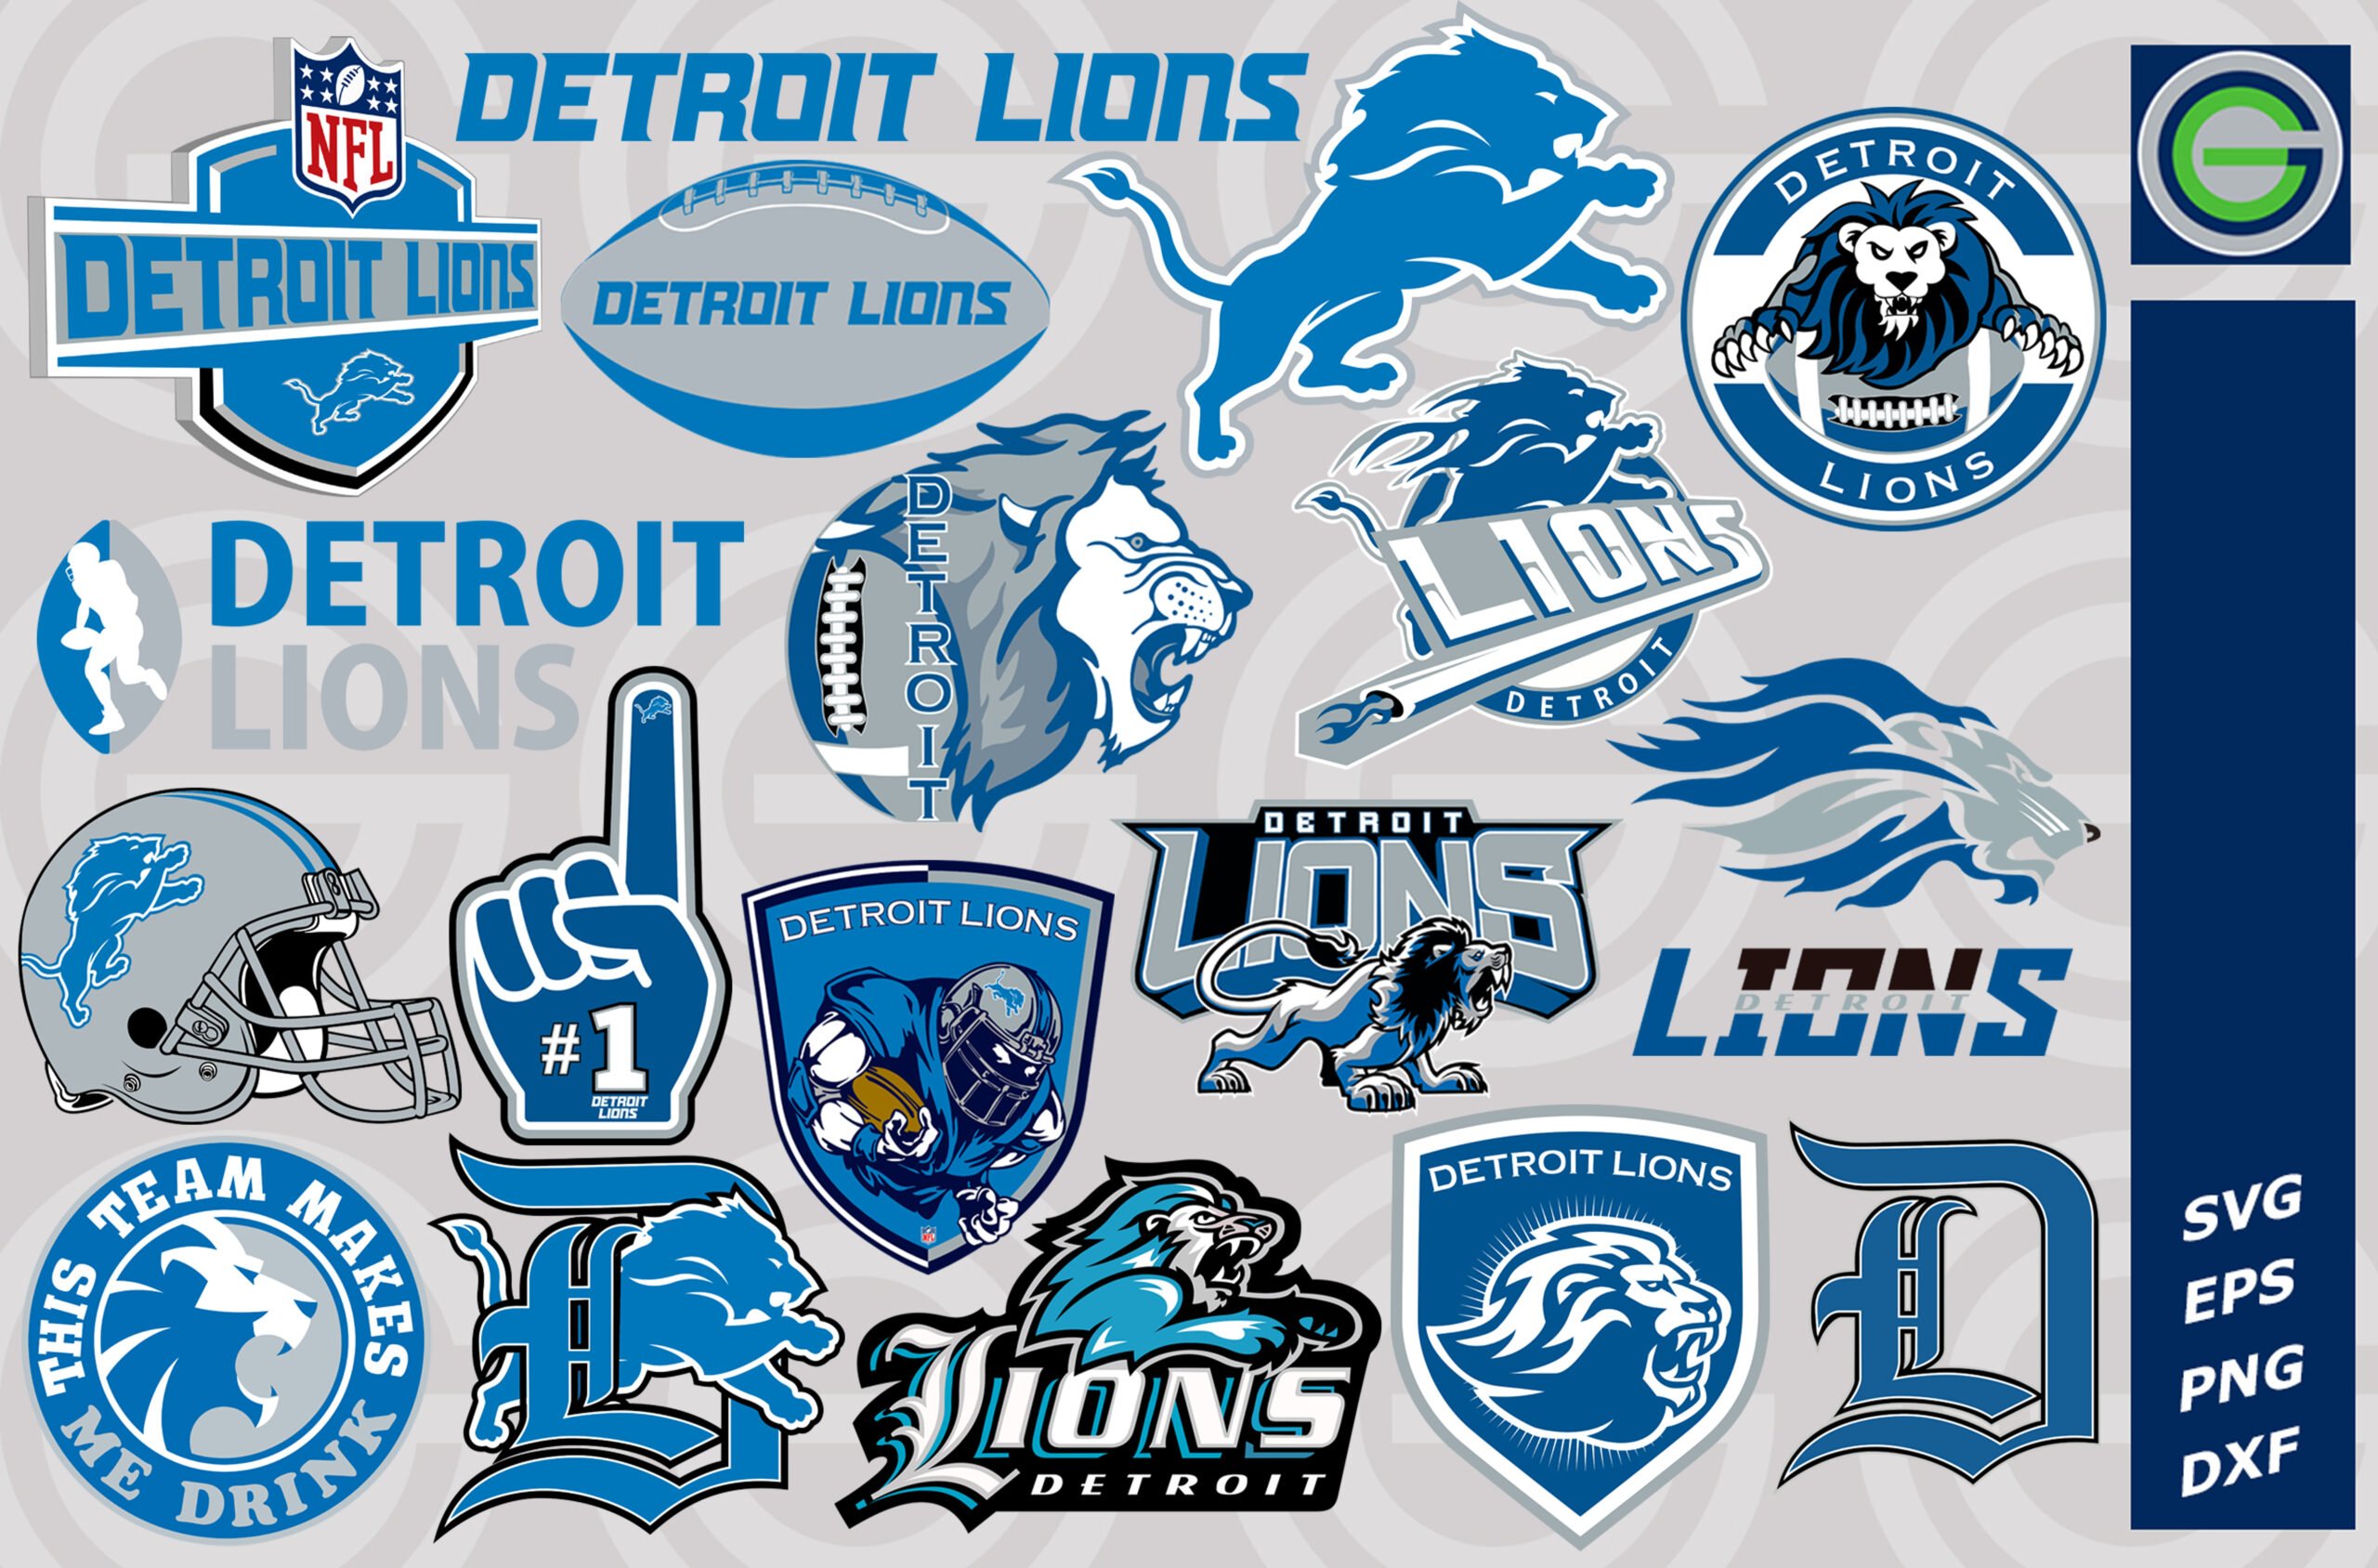 NFL Detroit Lions SVG, SVG Files For Silhouette, Detroit Lions Files For  Cricut, Detroit Lions SVG, DXF, EPS, PNG Instant Download. Detroit Lions SVG,  SVG Files For Silhouette, Detroit Lions Files For